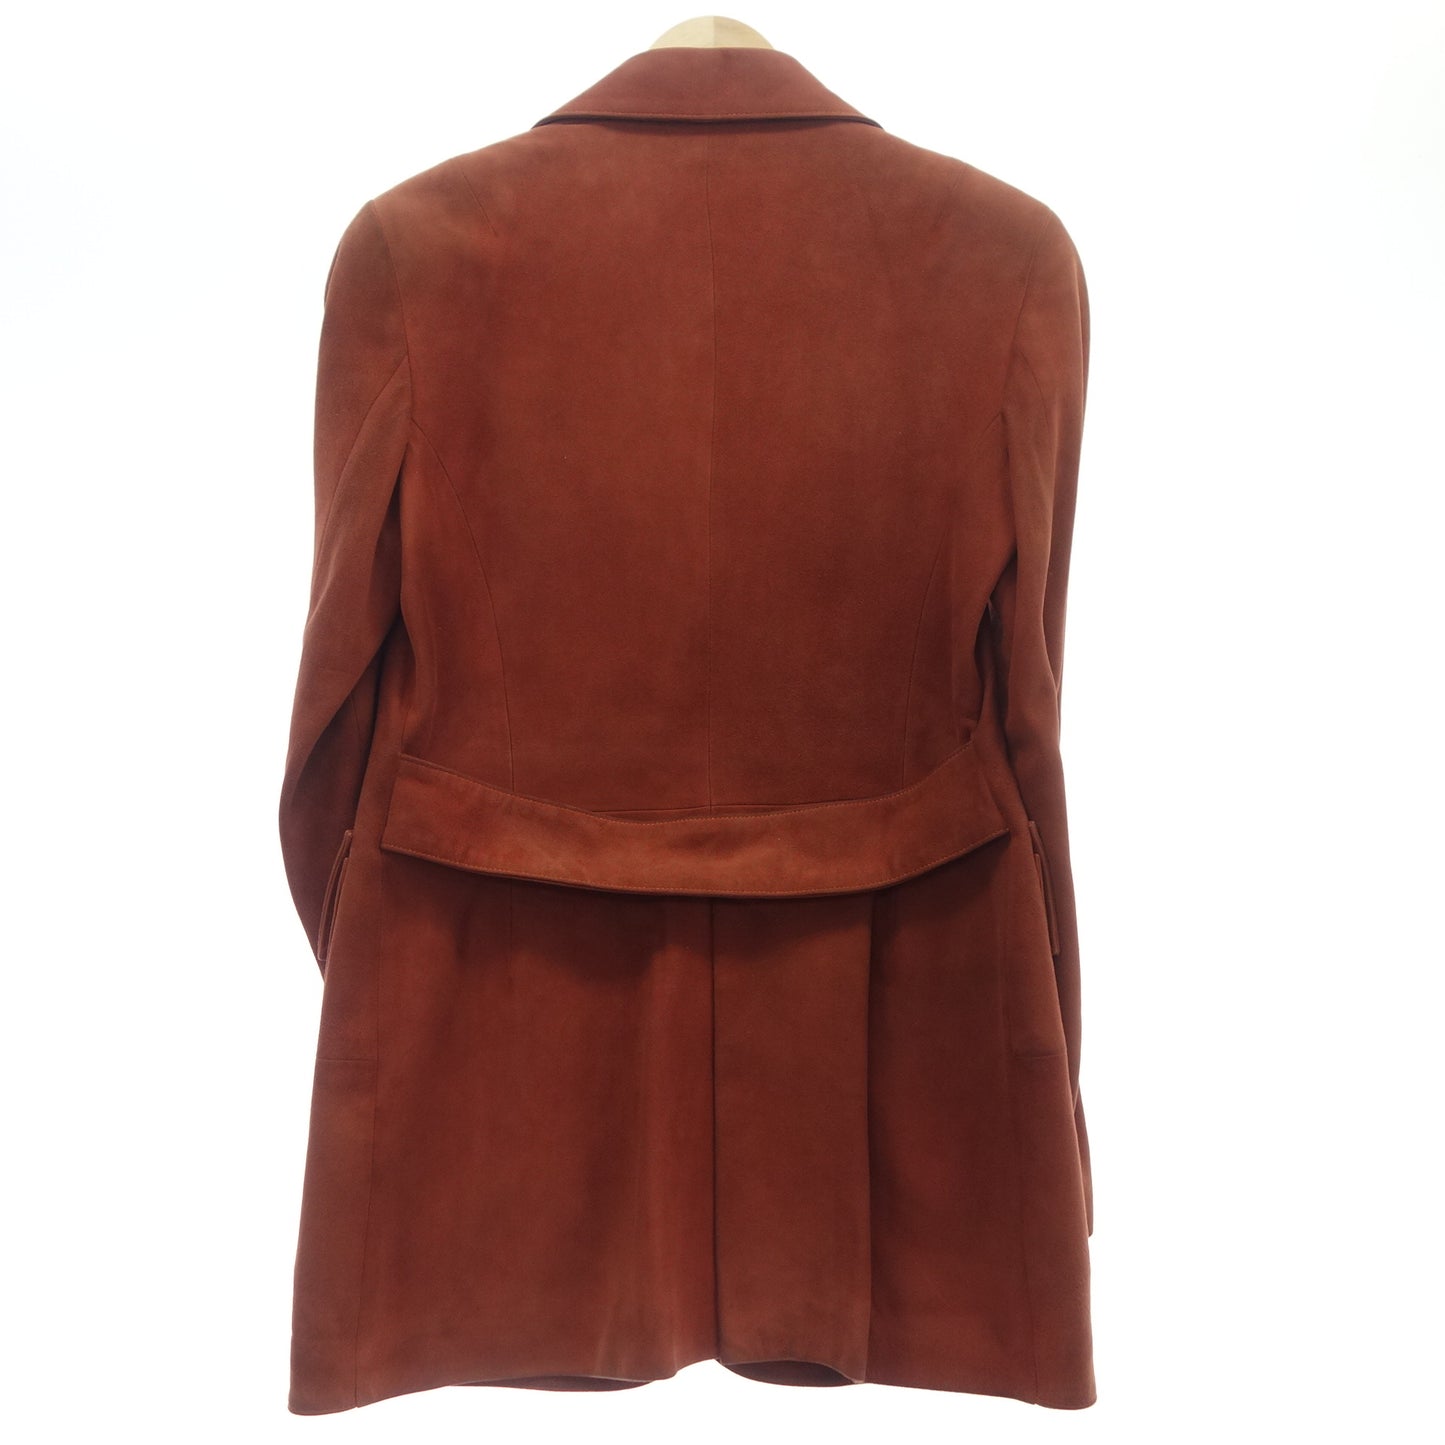 LOEWE Leather Jacket Suede Anagram Orange Women's 42 LOEWE [AFA13] [Used] 